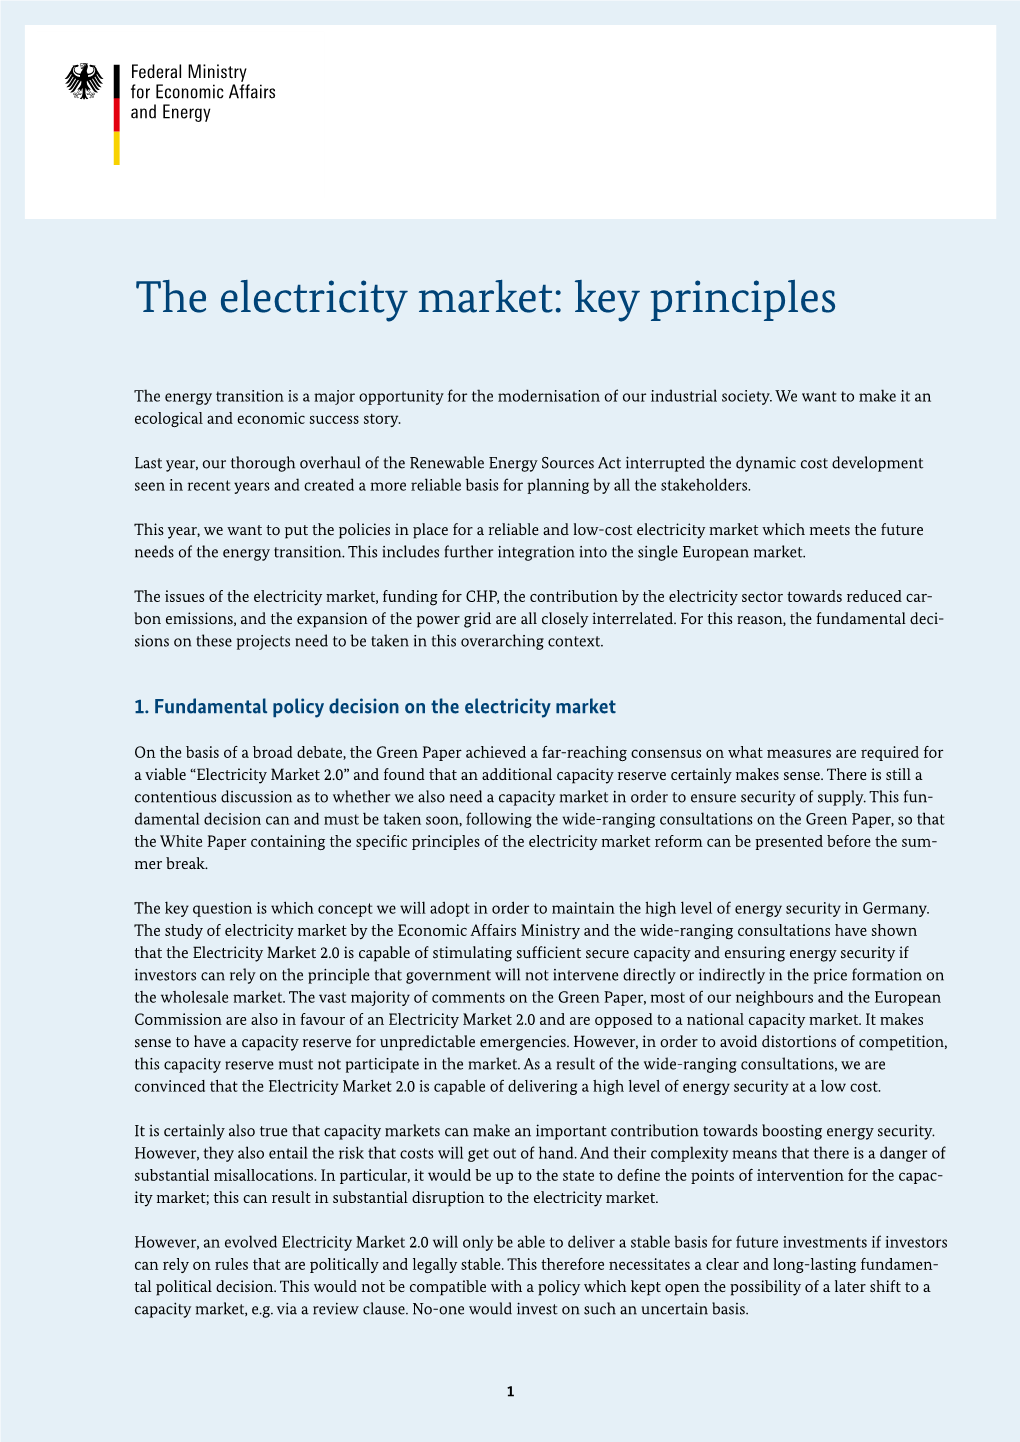 The Electricity Market: Key Principles